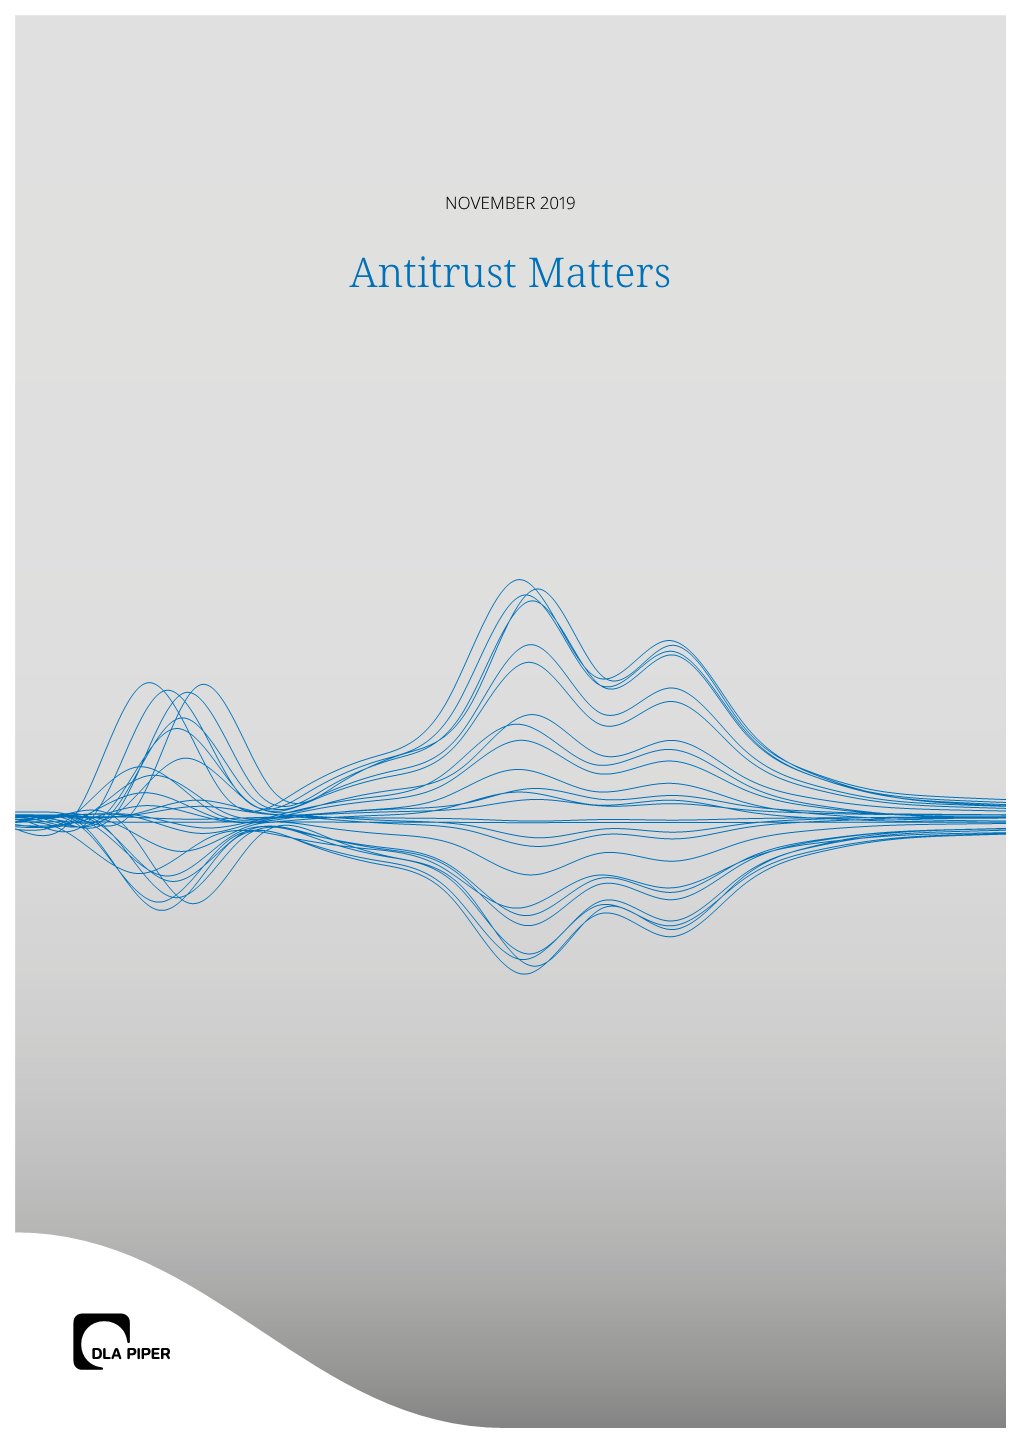 Read the Full Edition of Antitrust Matters November 2019